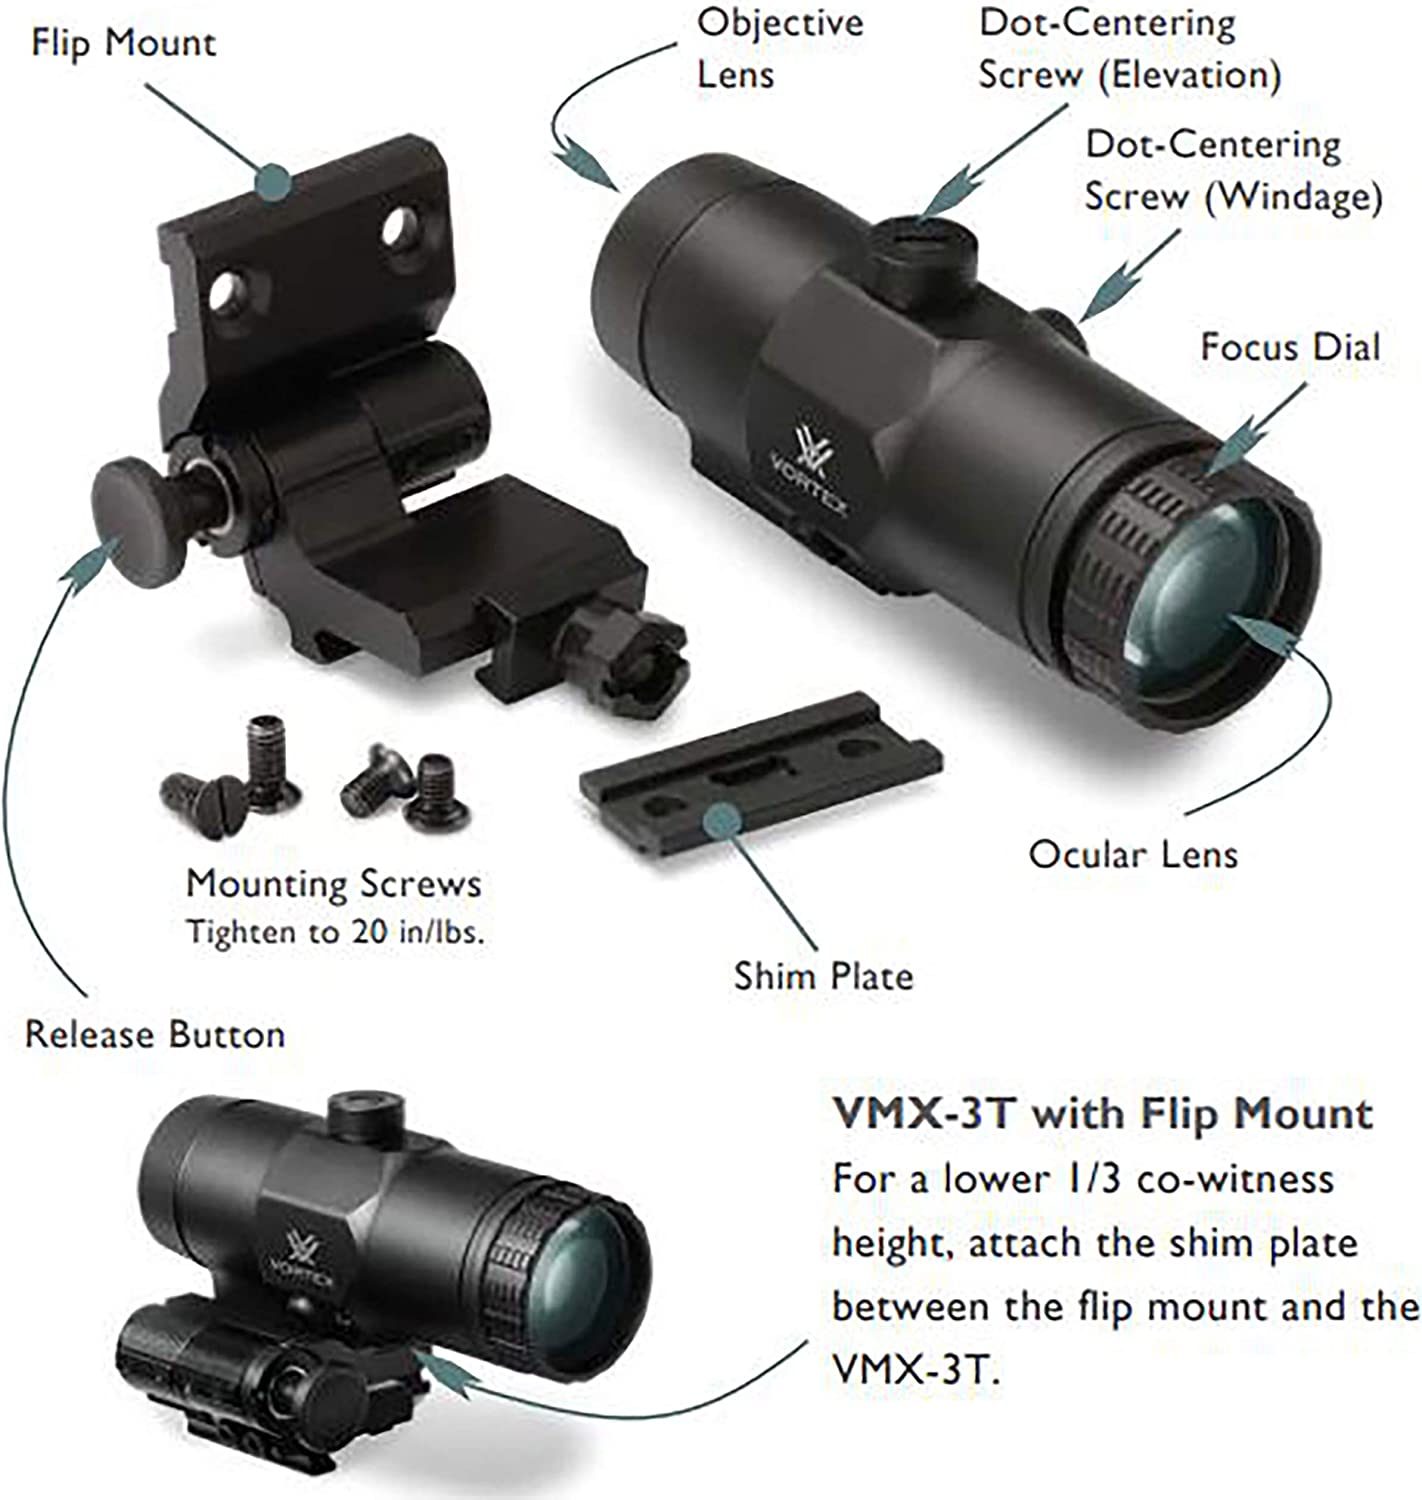 VMX-3T Magnifier With Flip Mount